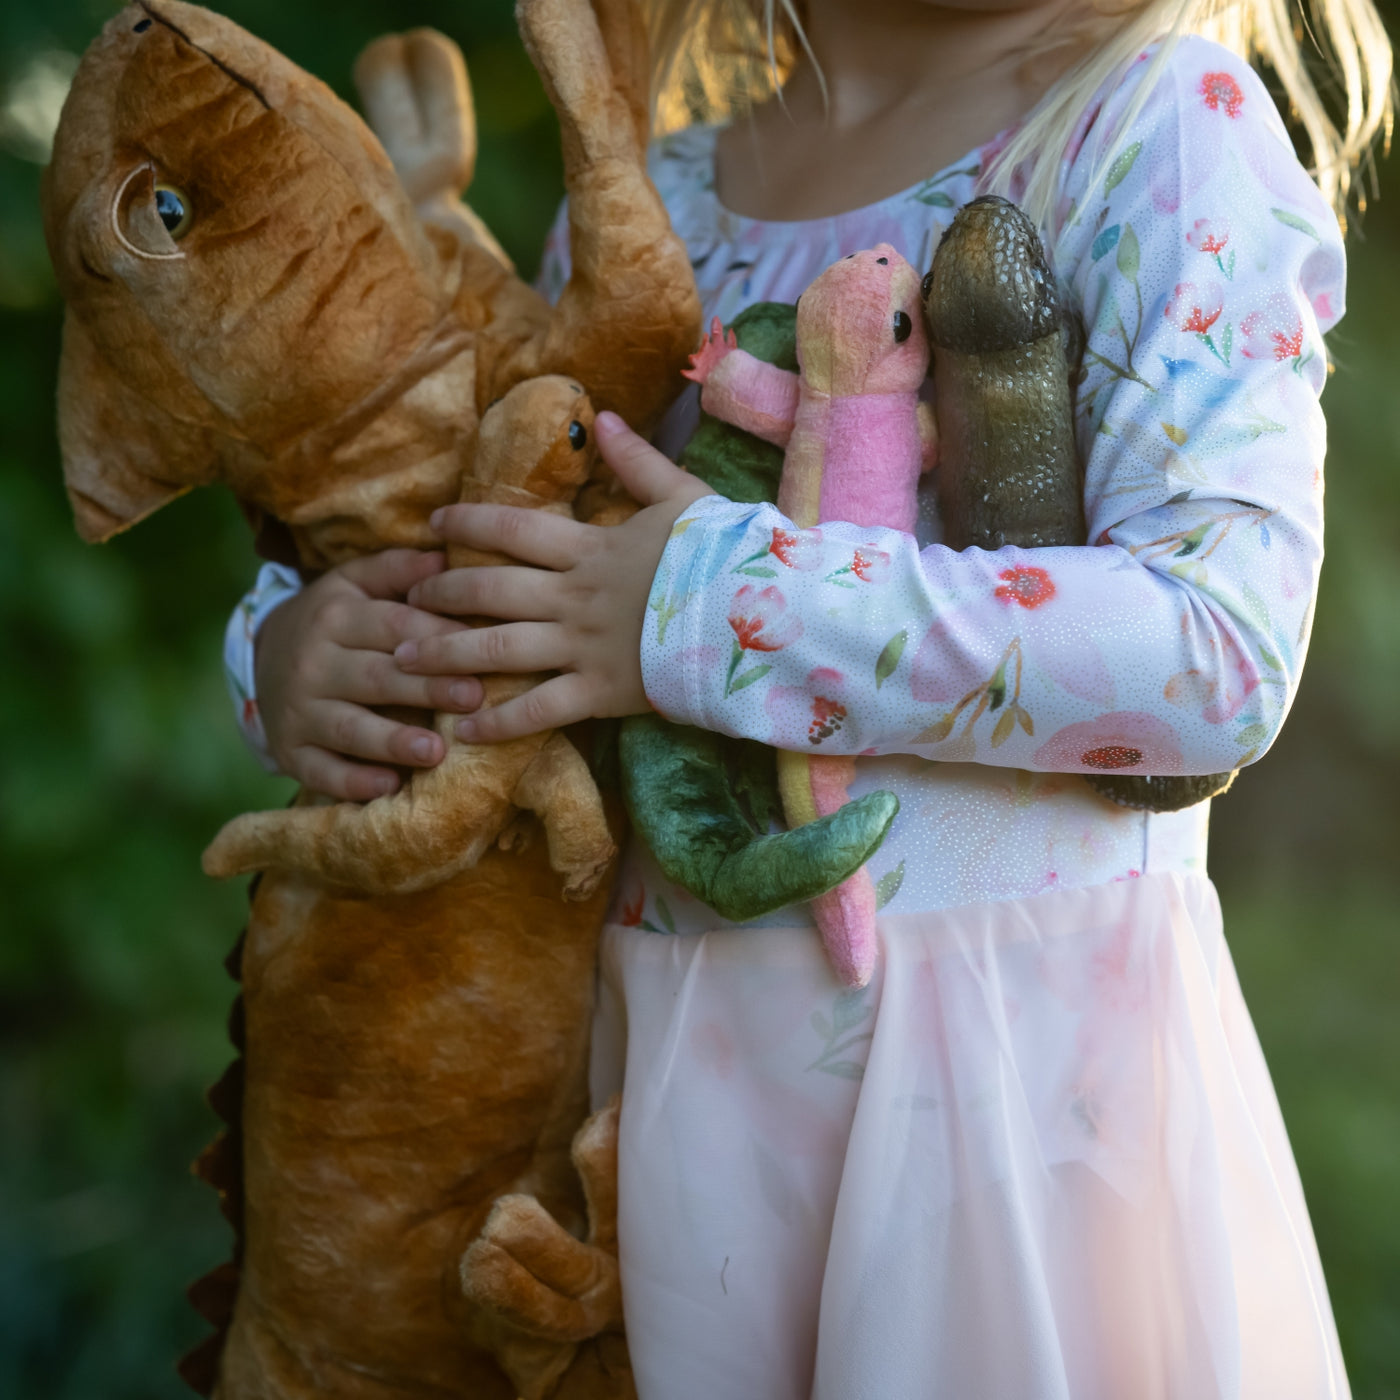 Lizard Stuffed Animal Toy, 26.8 Inches - MorisMos Stuffed Animals